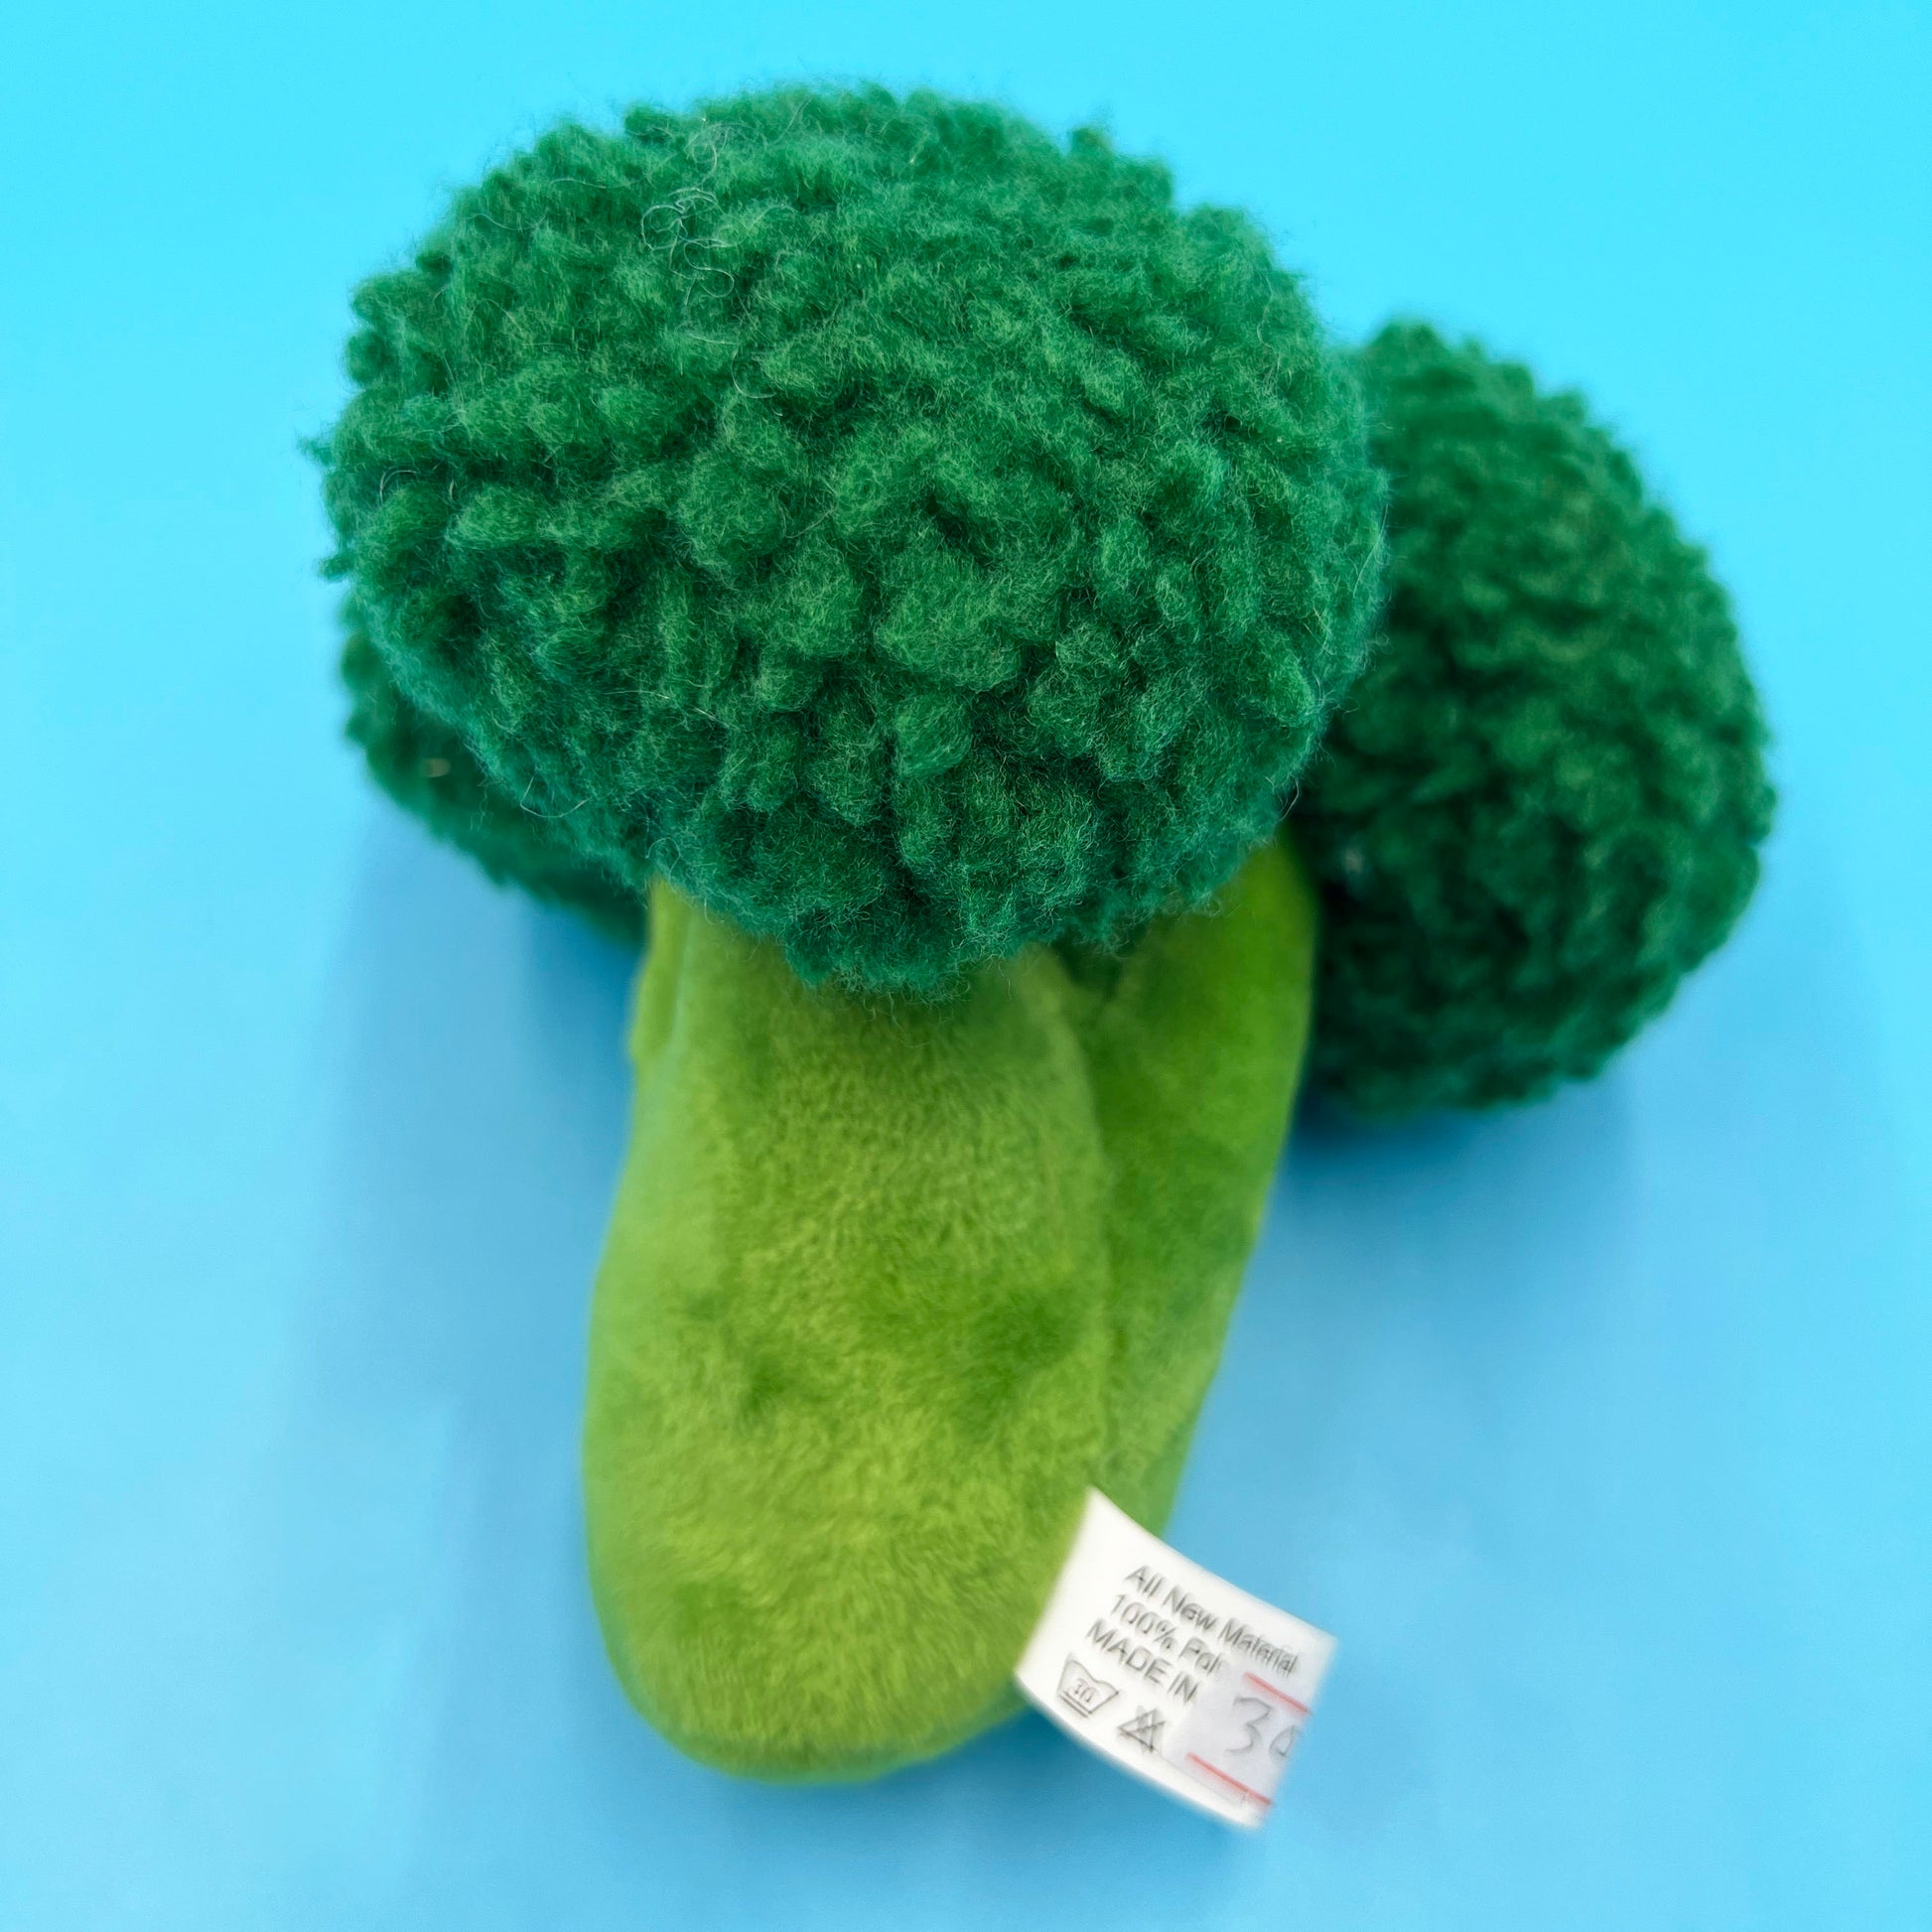 Broccoli Plushie Toy bearsupreme